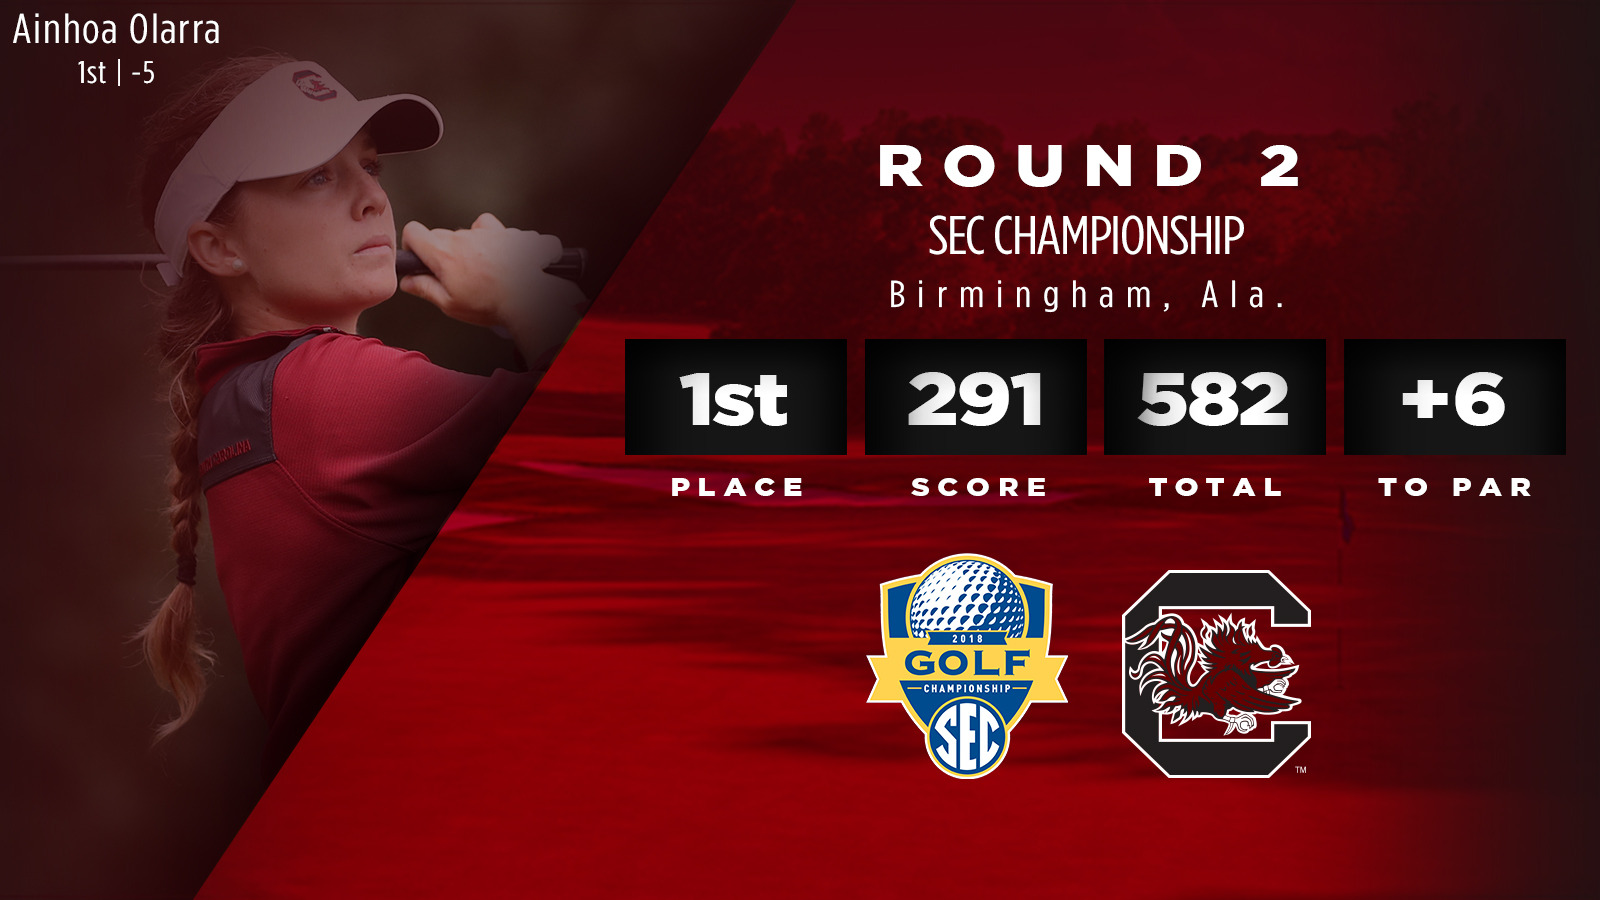 South Carolina Grabs The Lead At SEC Championship